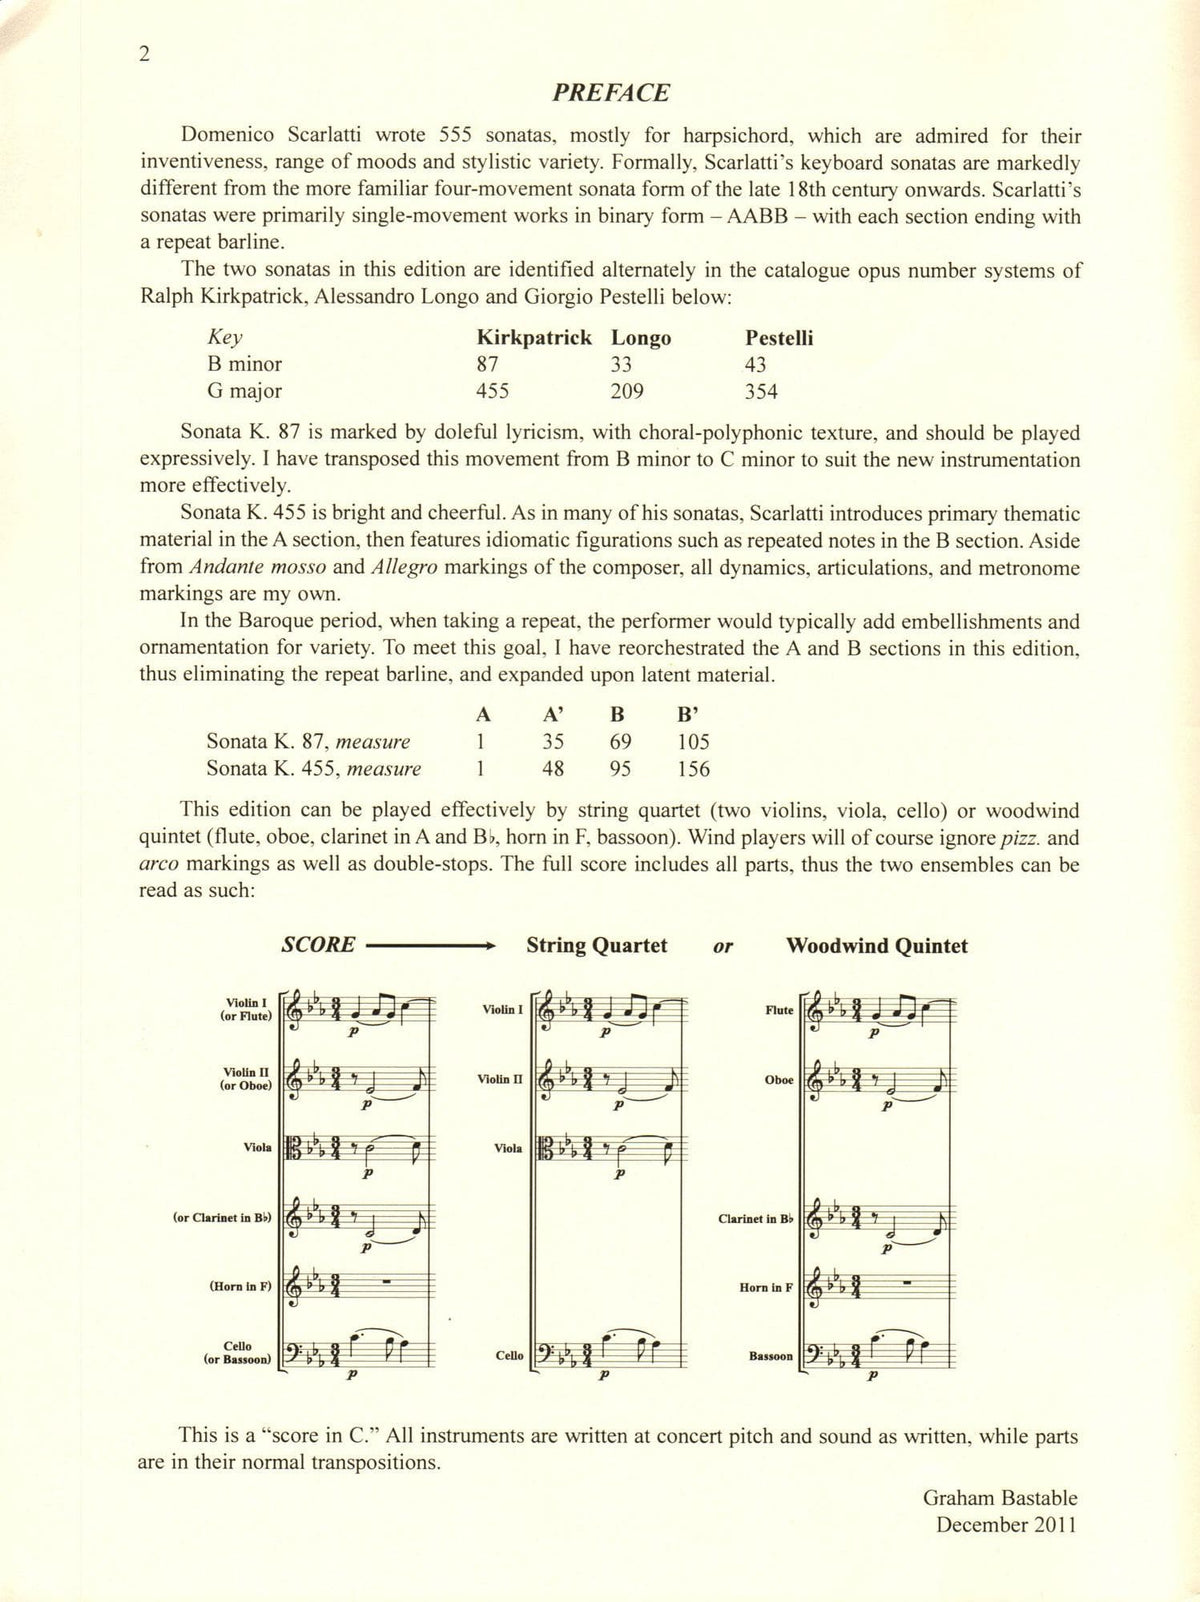 Scarlatti, Domenico - Two Sonatas, K. 87 and K. 455 - for Two Violins, Viola, and Cello - Edited by Bastable - International